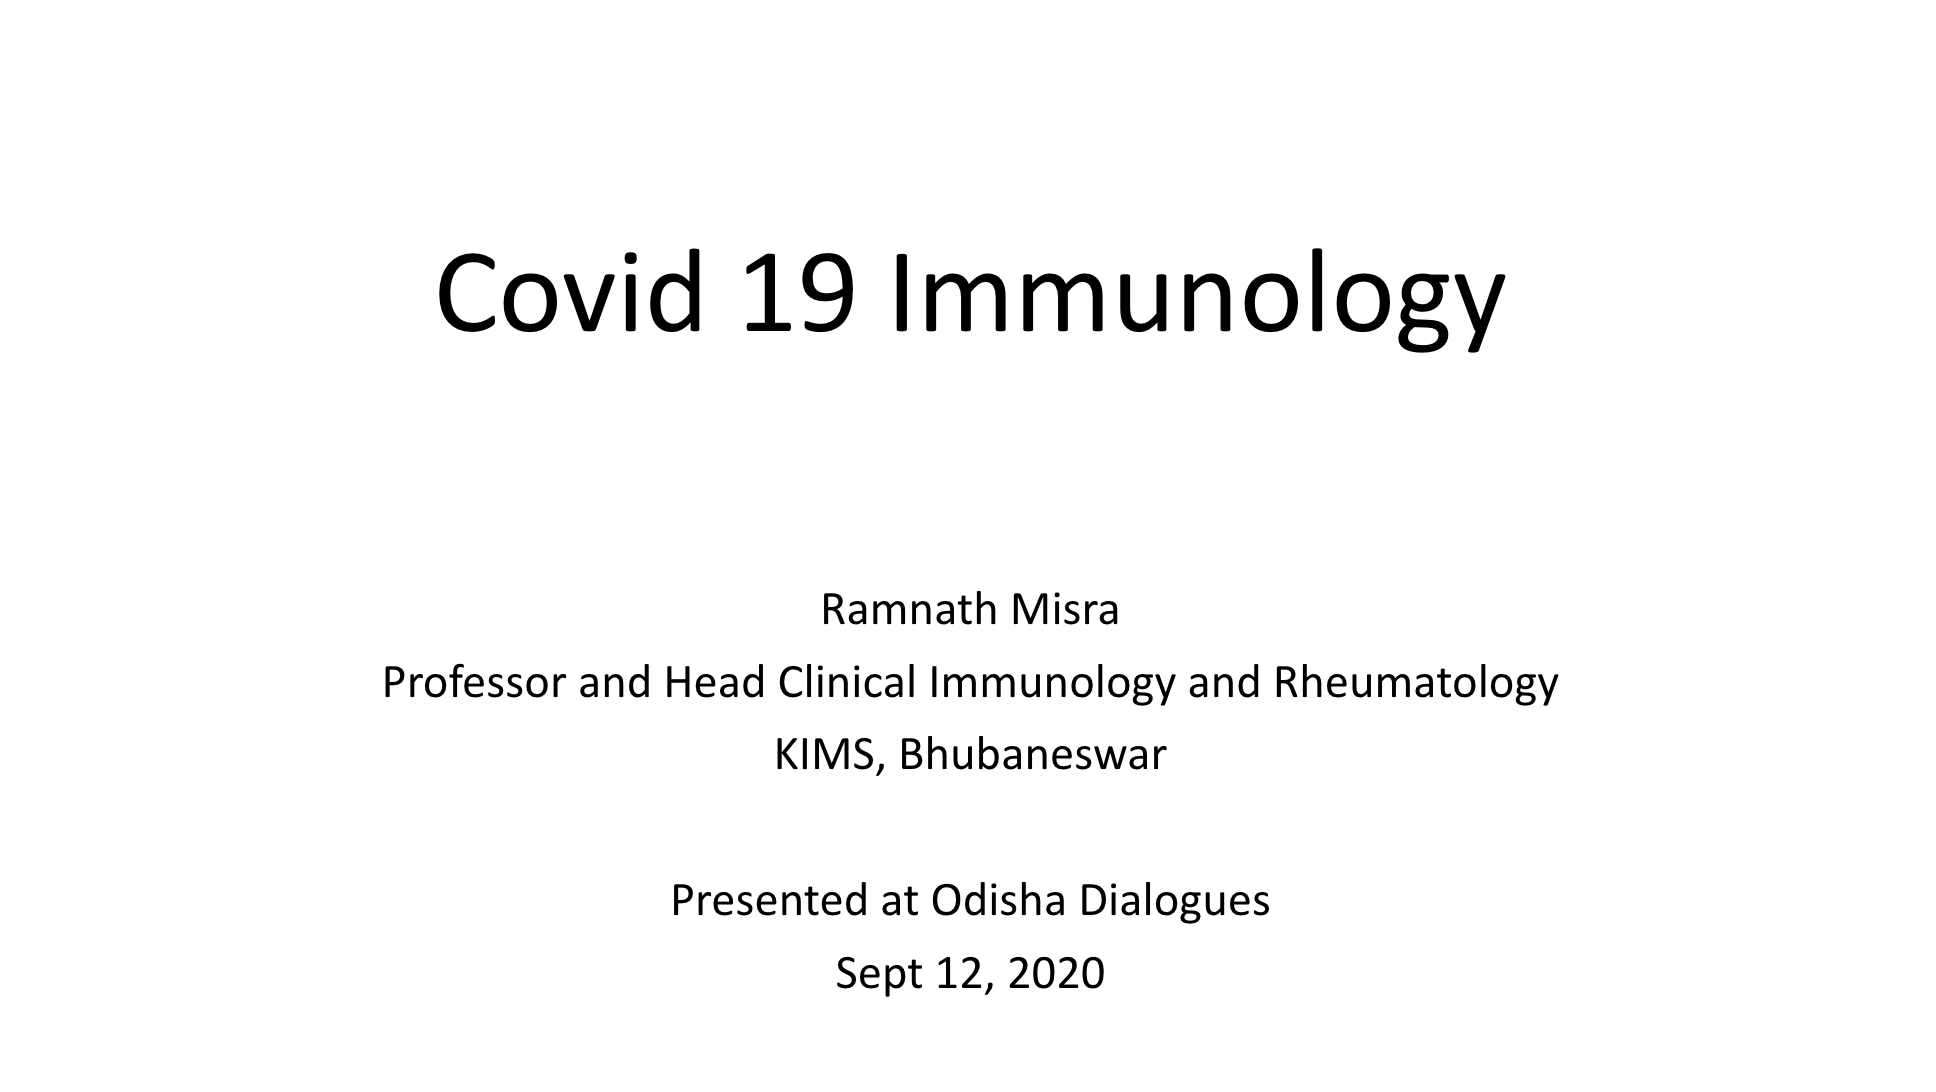 COVID-19 Immunology by Ramnath Mishra, Professor and Head Clinical Immunology and Rheumatology, KIMS, Bhubaneshwar